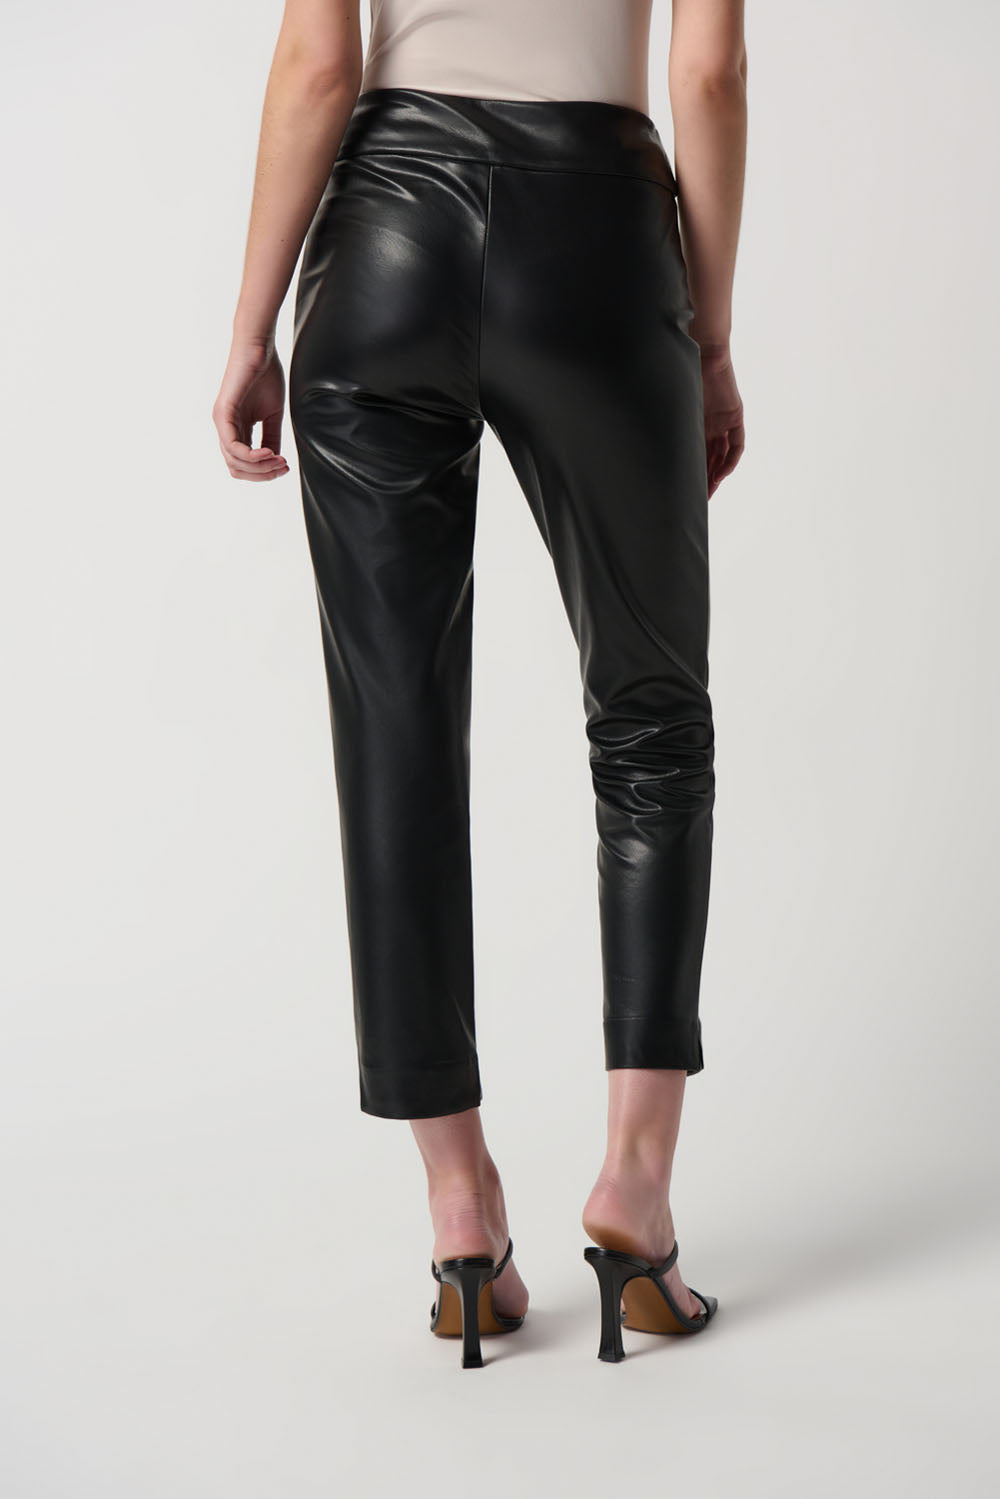 Joseph Ribkoff Black Leatherette Pants Style 231151